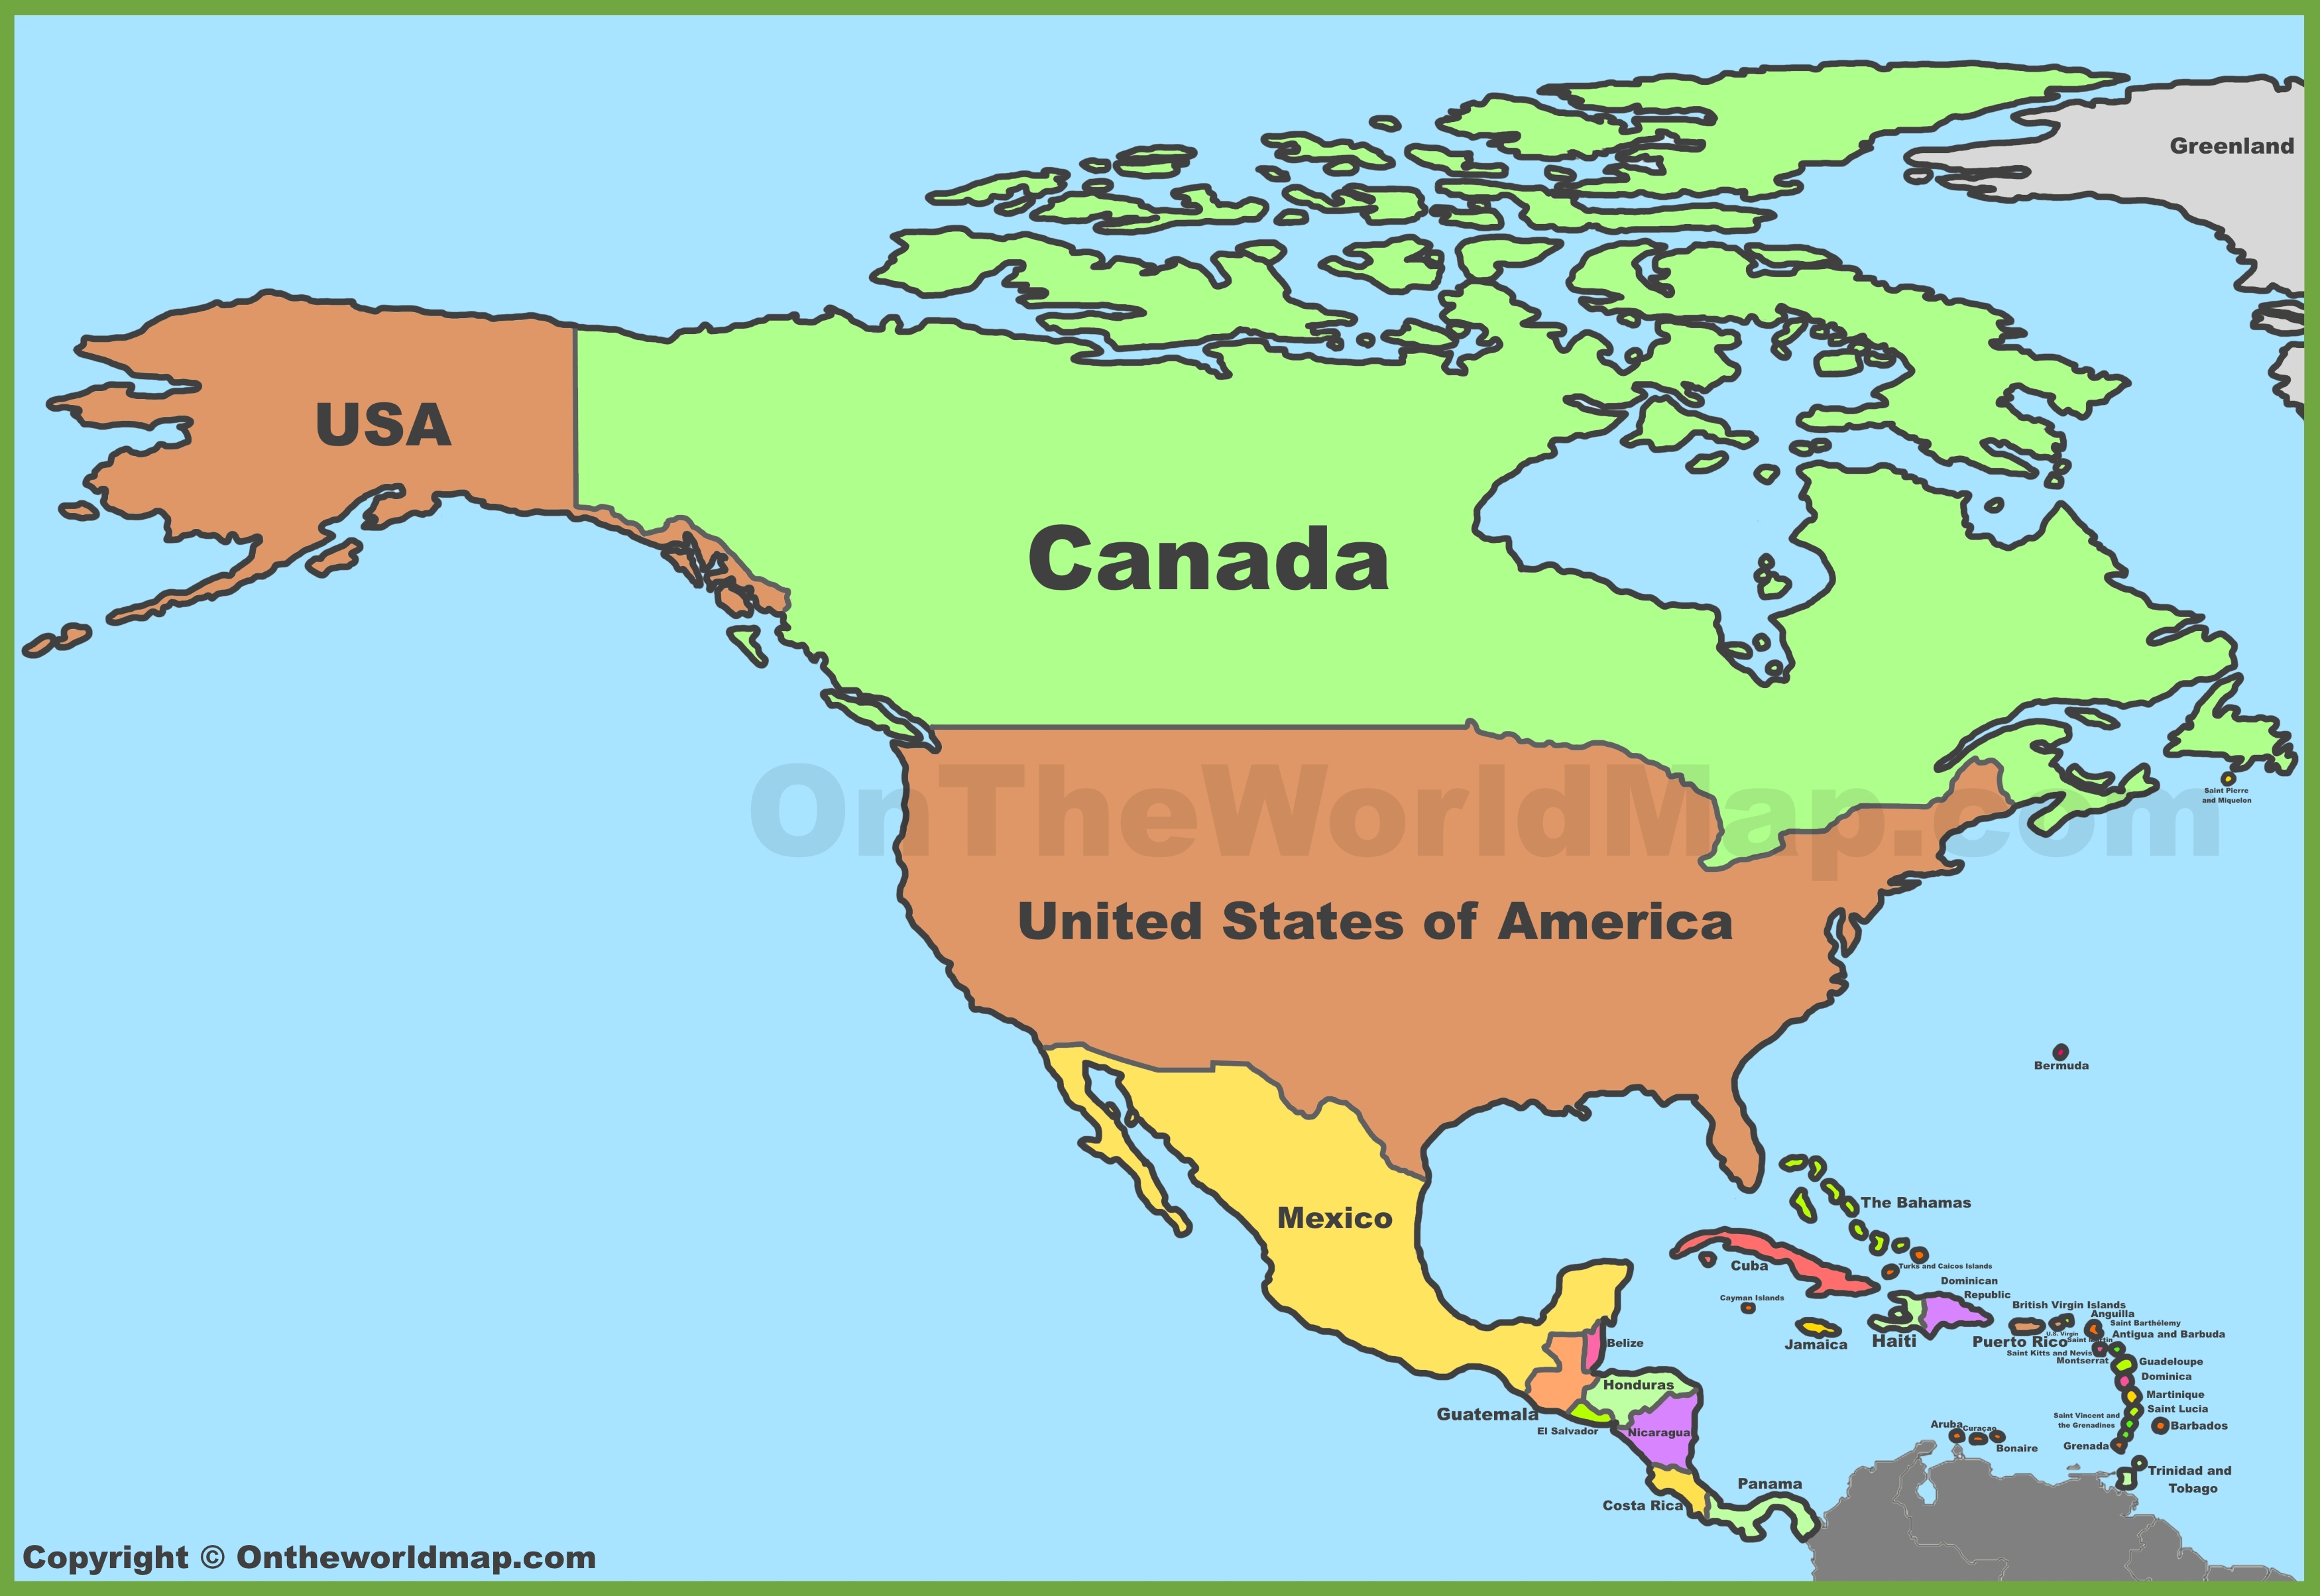 North America Maps | Maps of North America - OnTheWorldMap.com ﻿